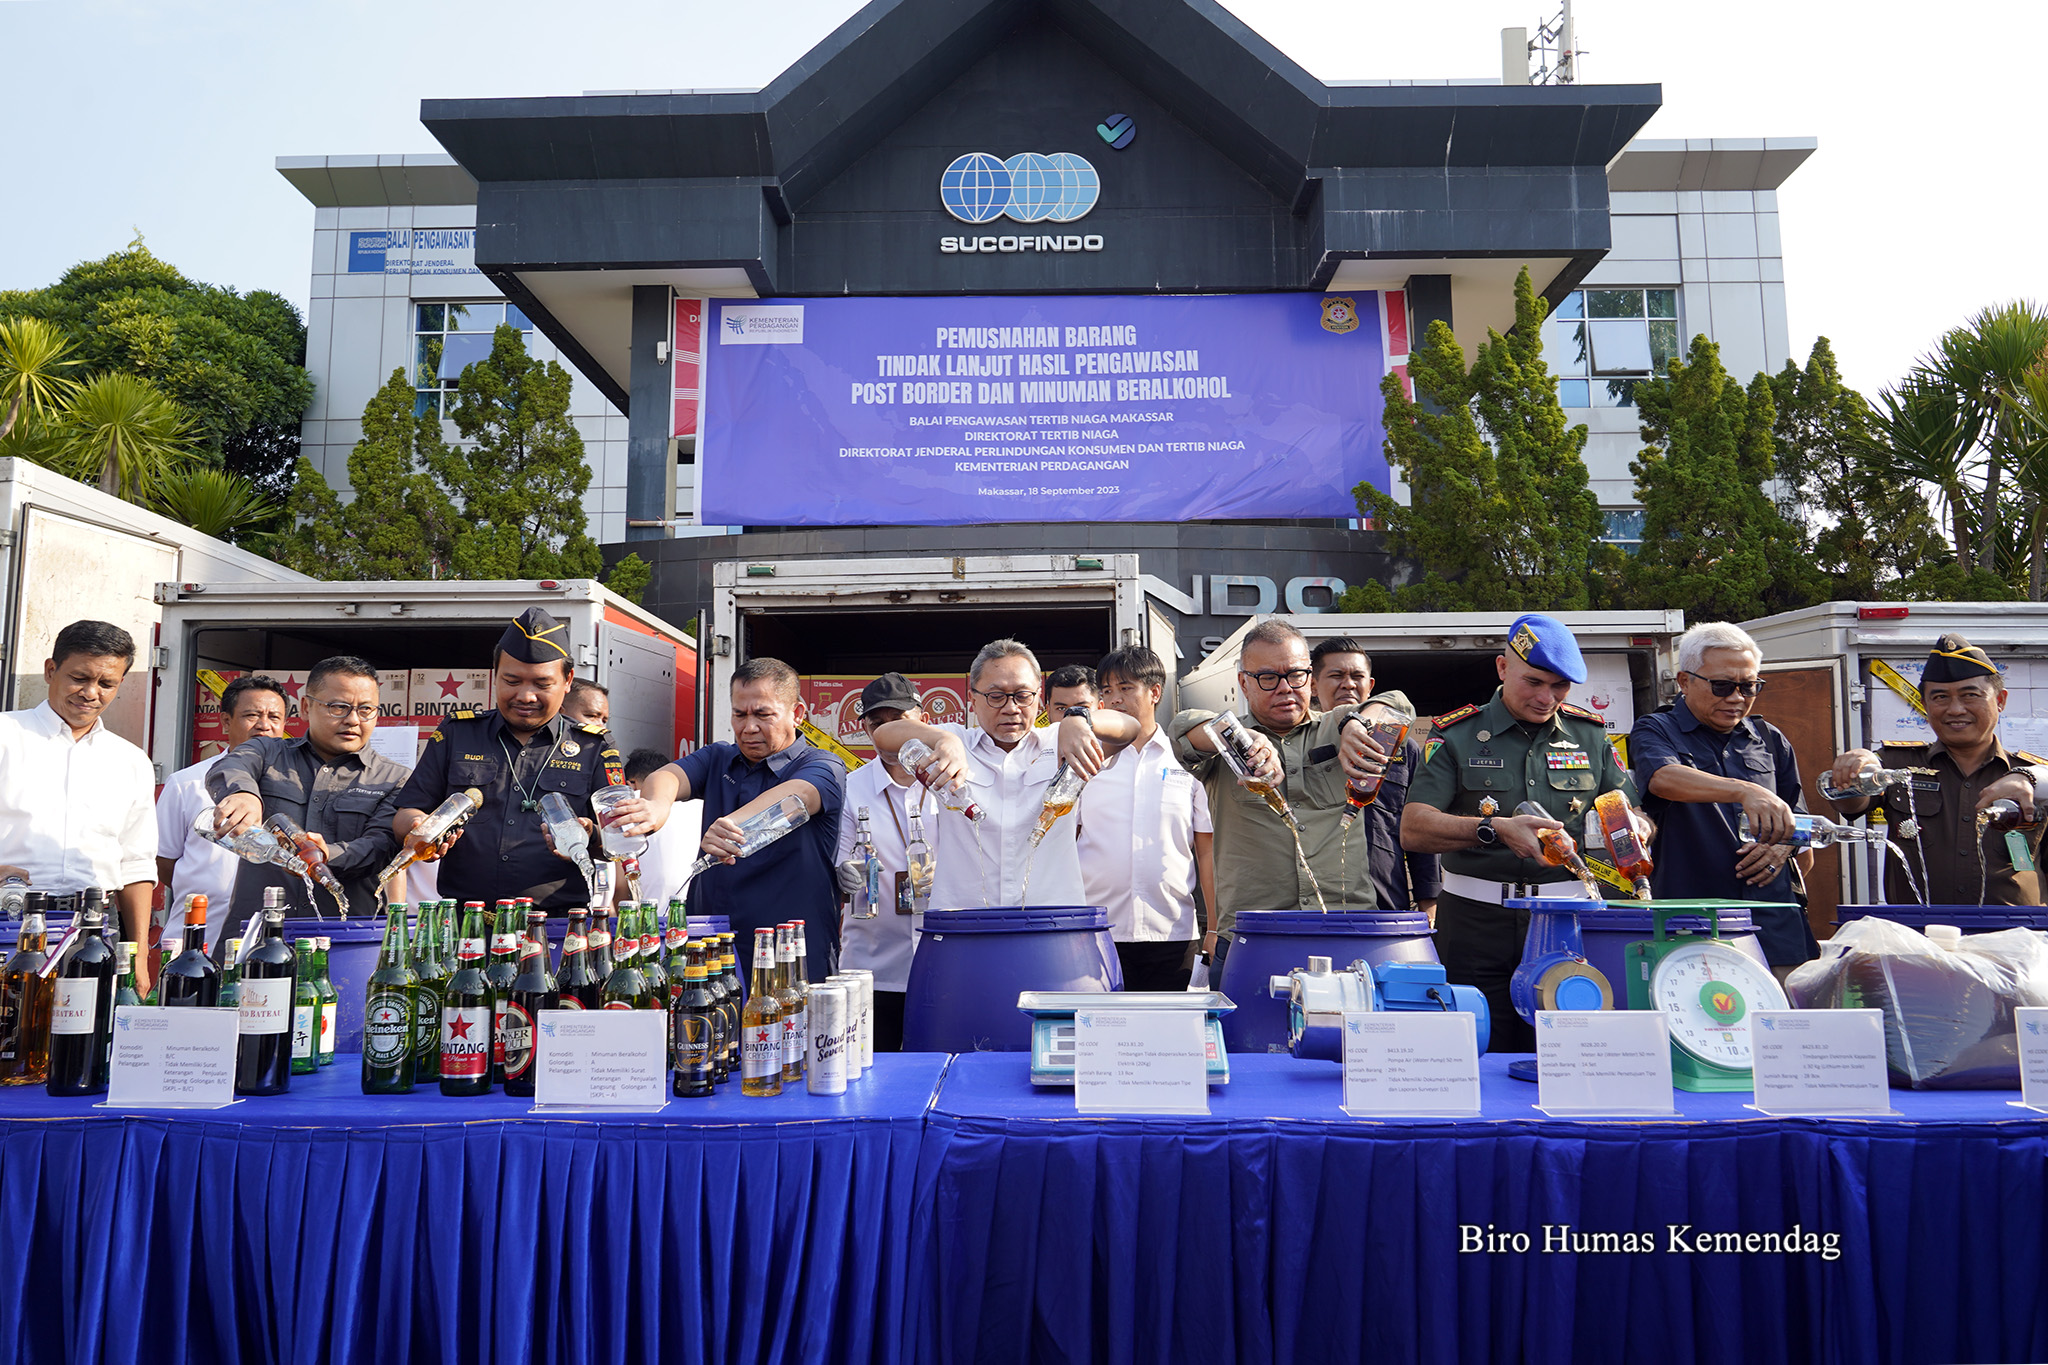 Menteri Perdagangan, Zulkifli Hasan memimpin pemusnahan minuman beralkohol dan barang hasil pengawasan post border senilai Rp7 miliar di Balai Pengawasan Tertib Niaga (BPTN) Makassar, Kota Makassar, Sulawesi Selatan, Senin (18 Sep).